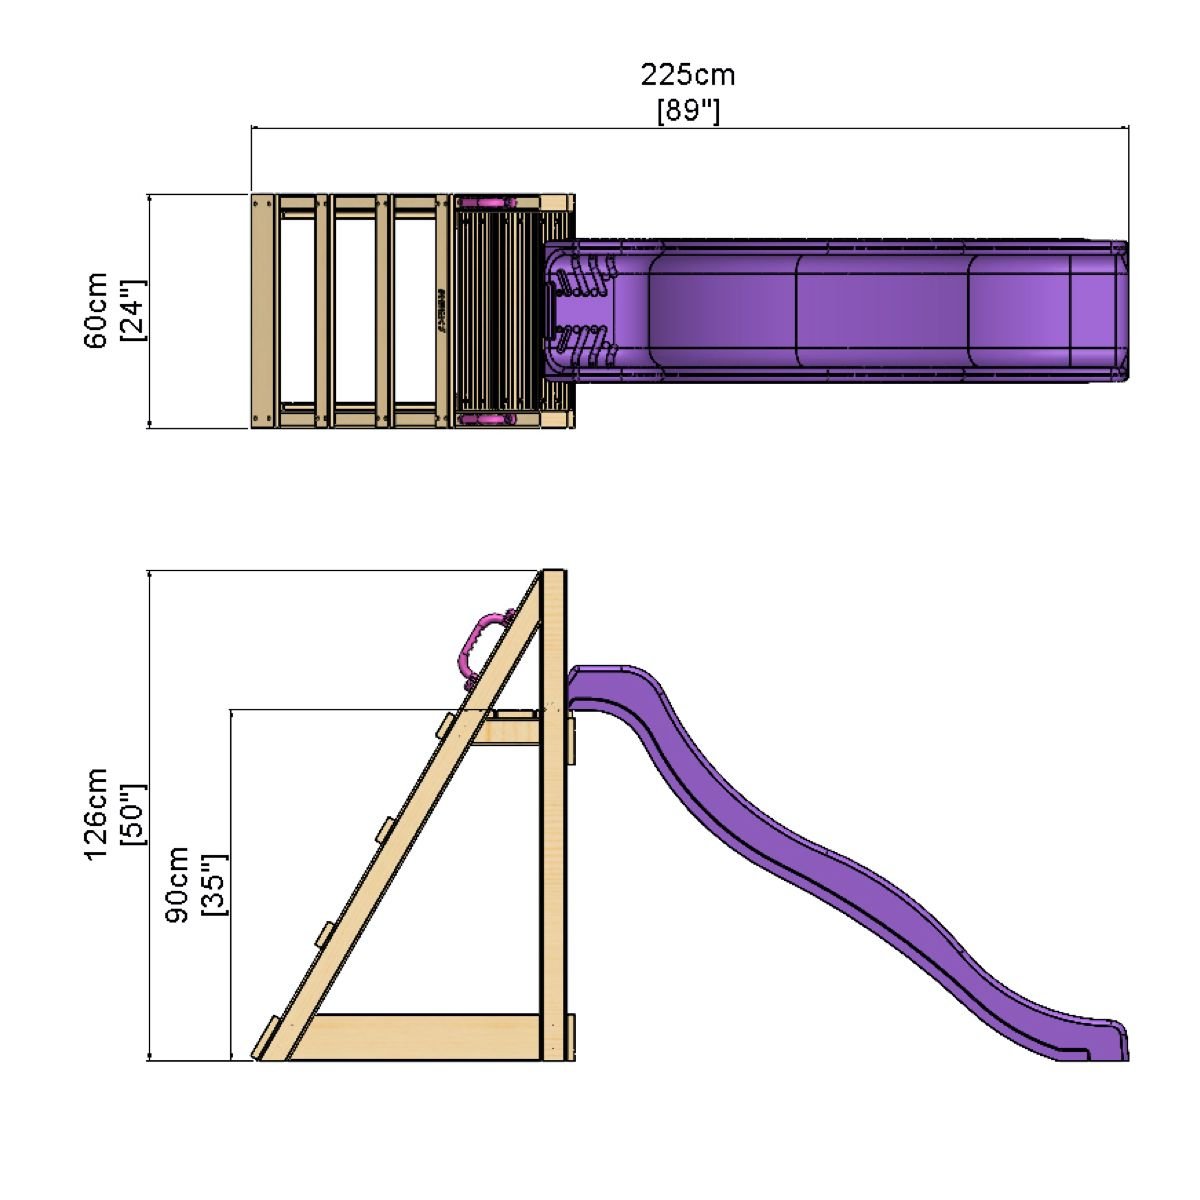 Rebo Free Standing Garden Wave Water Slide with Wooden Platform - 6ft slide Purple